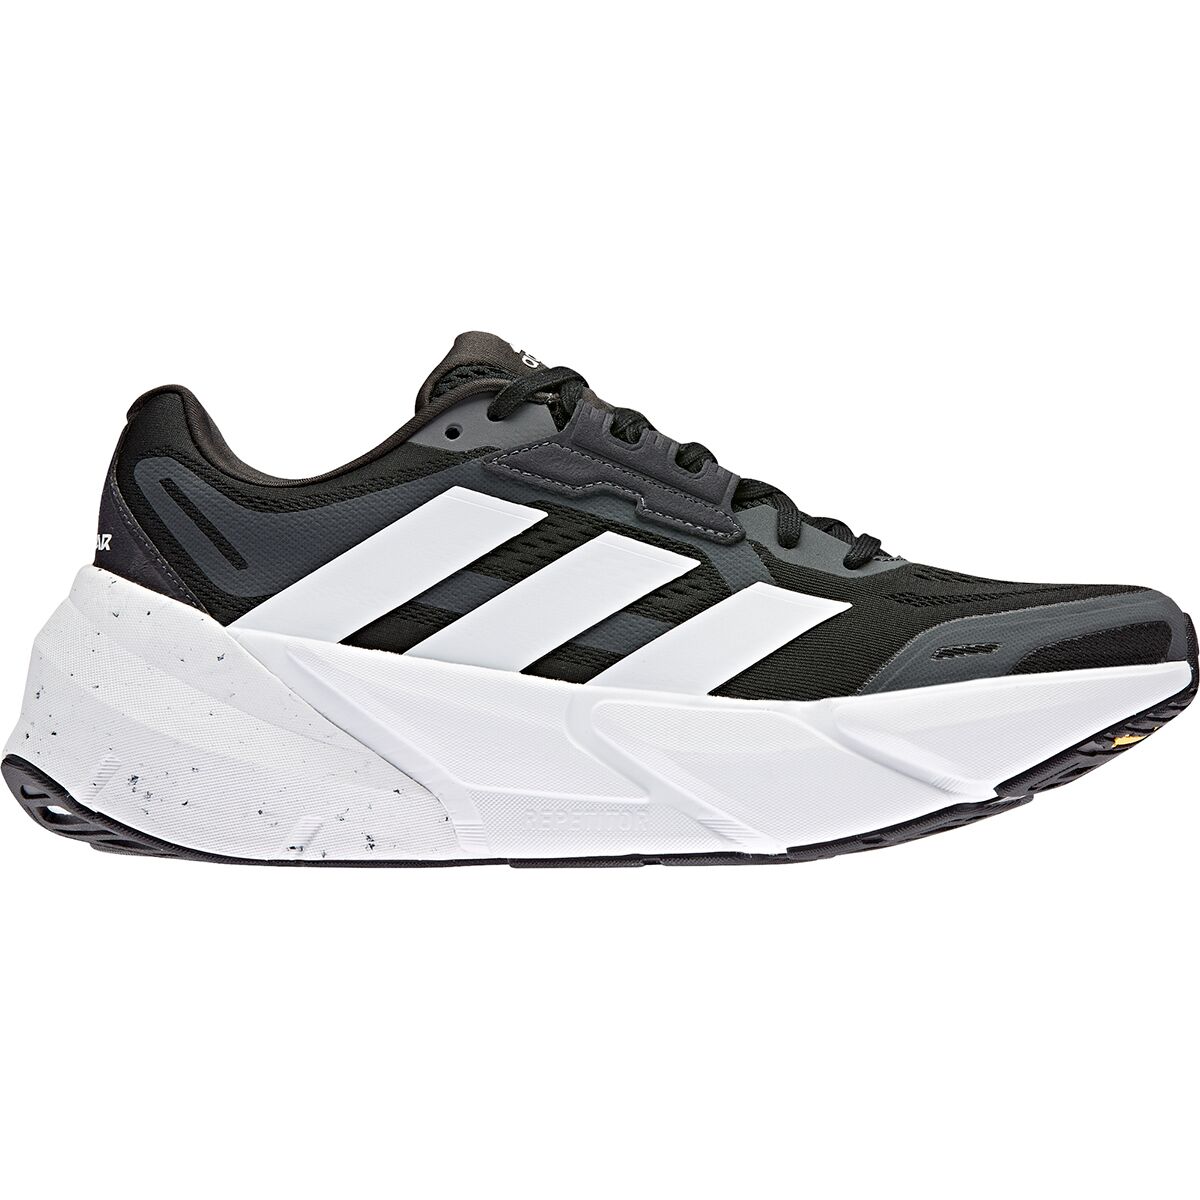 Adidas Adistar Running Shoe - Men's